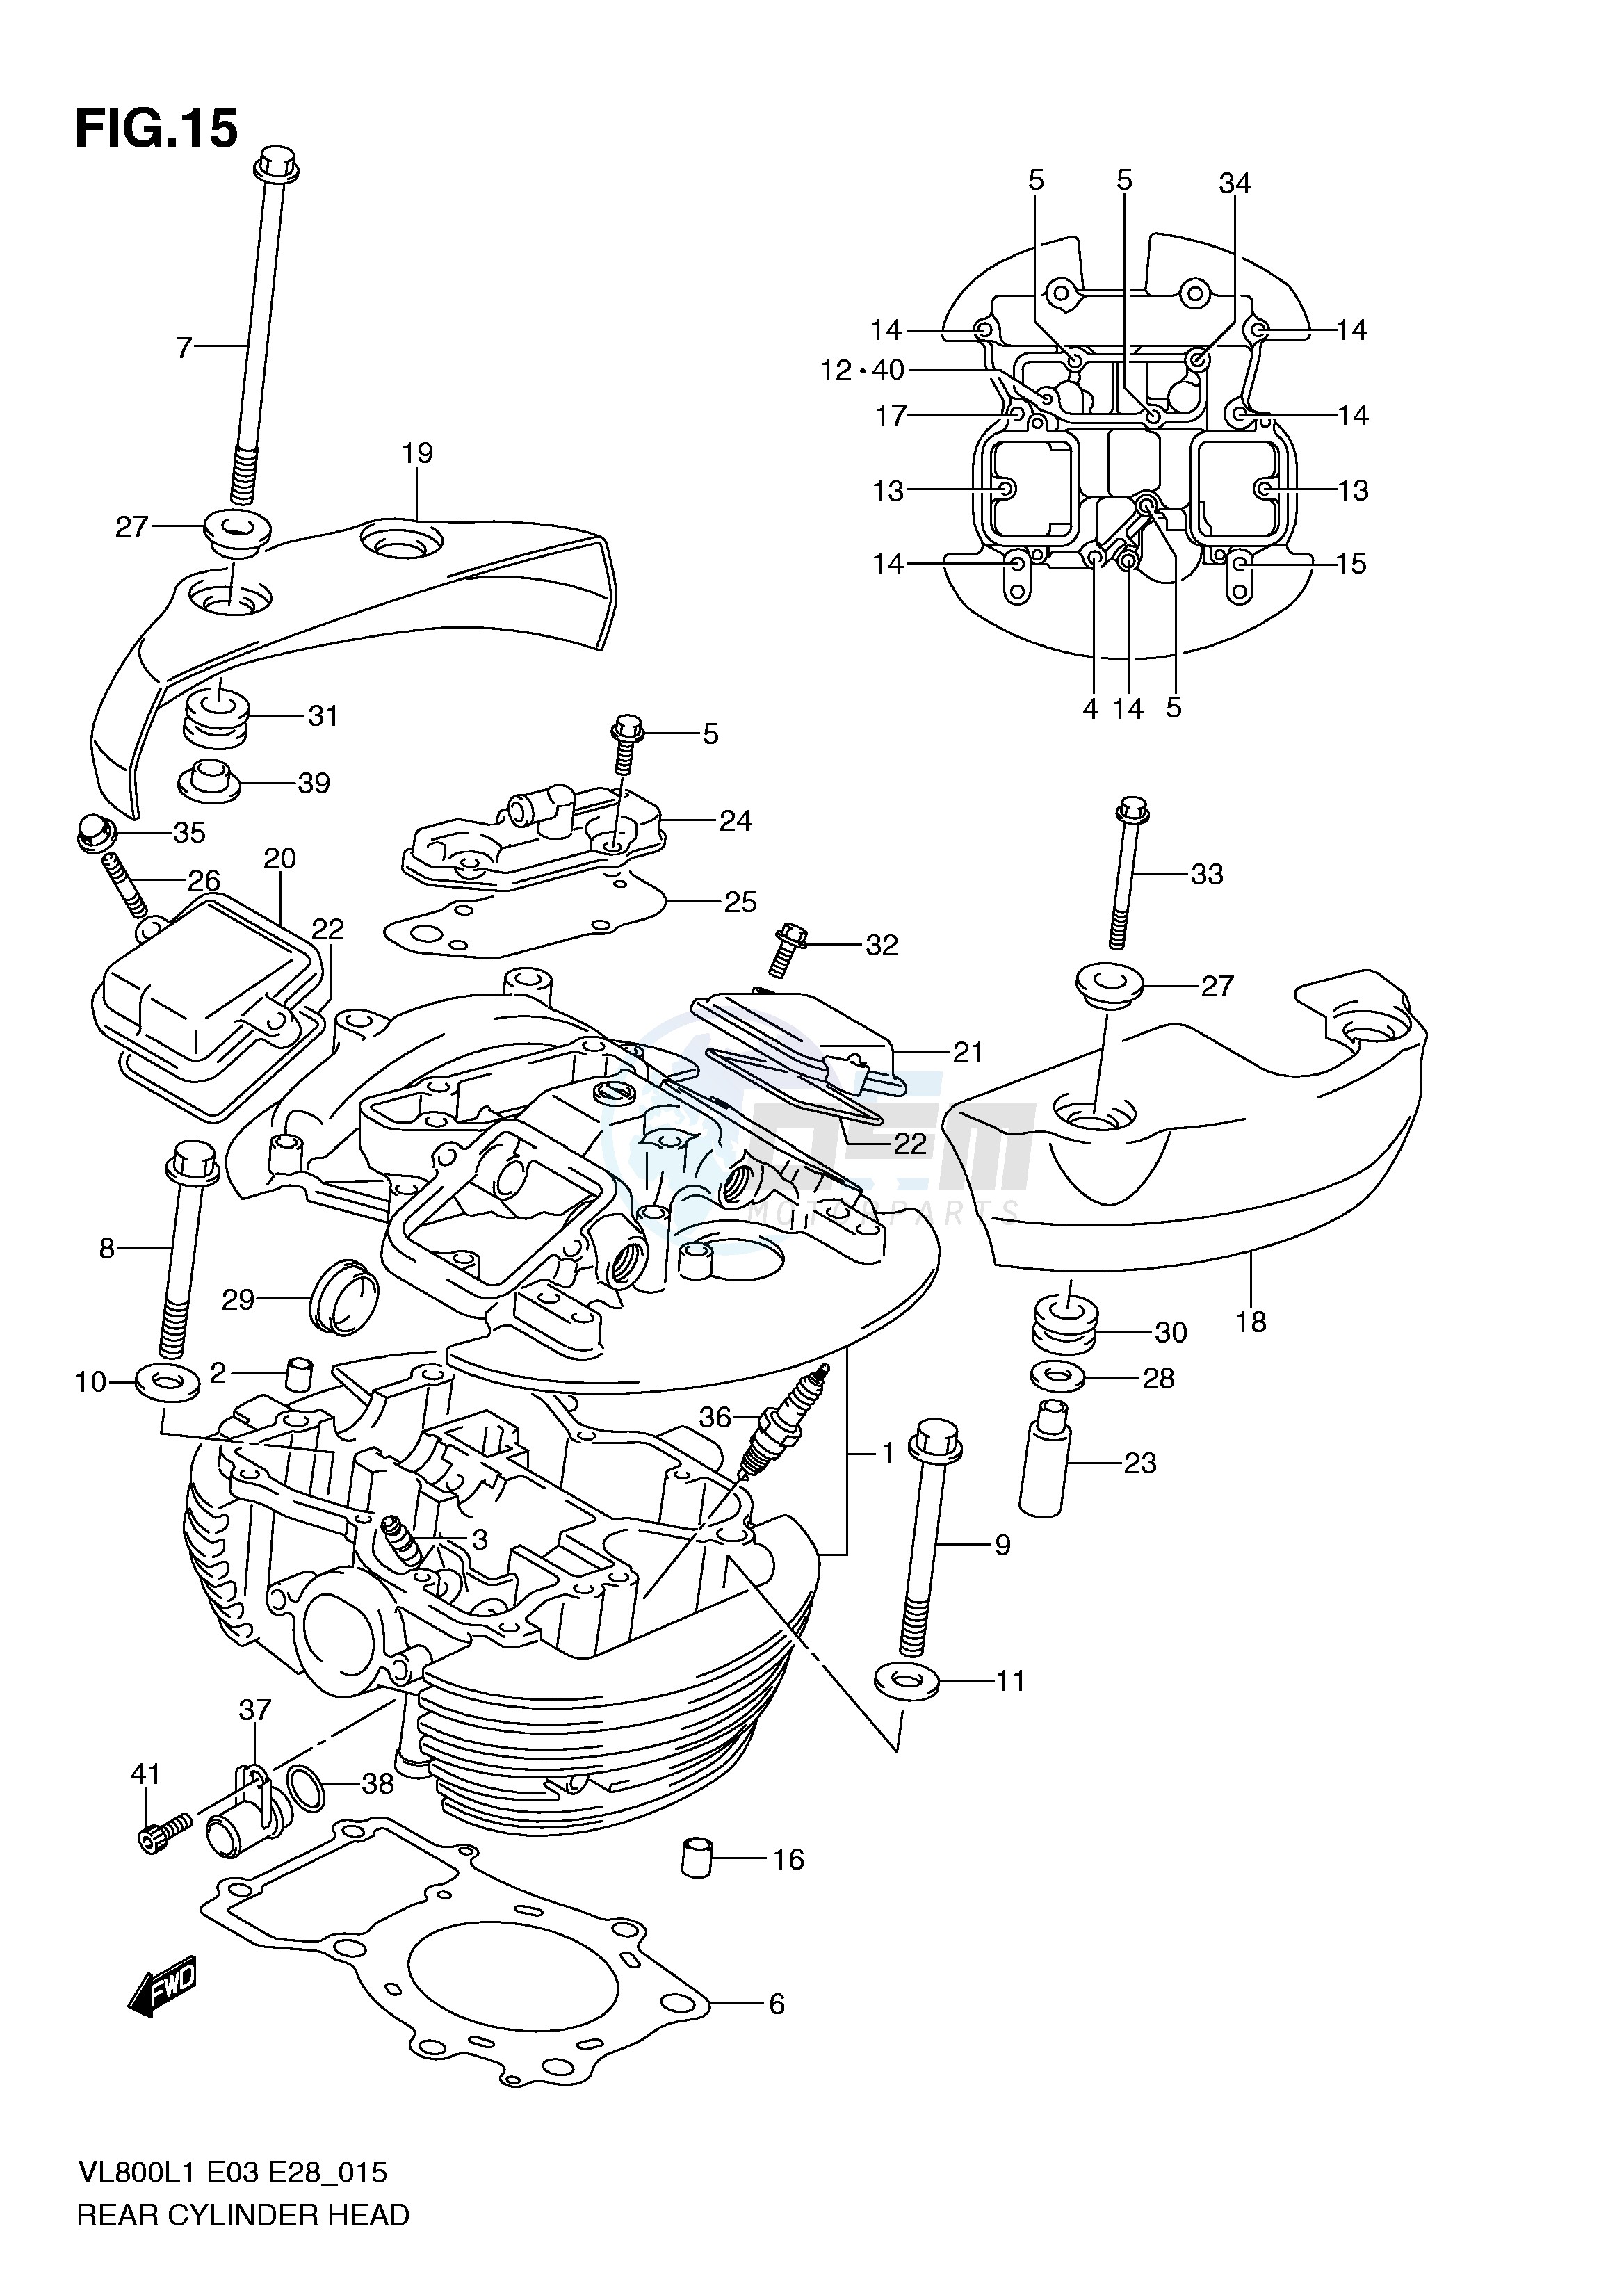 REAR CYLINDER HEAD (VL800CL1 E28) blueprint